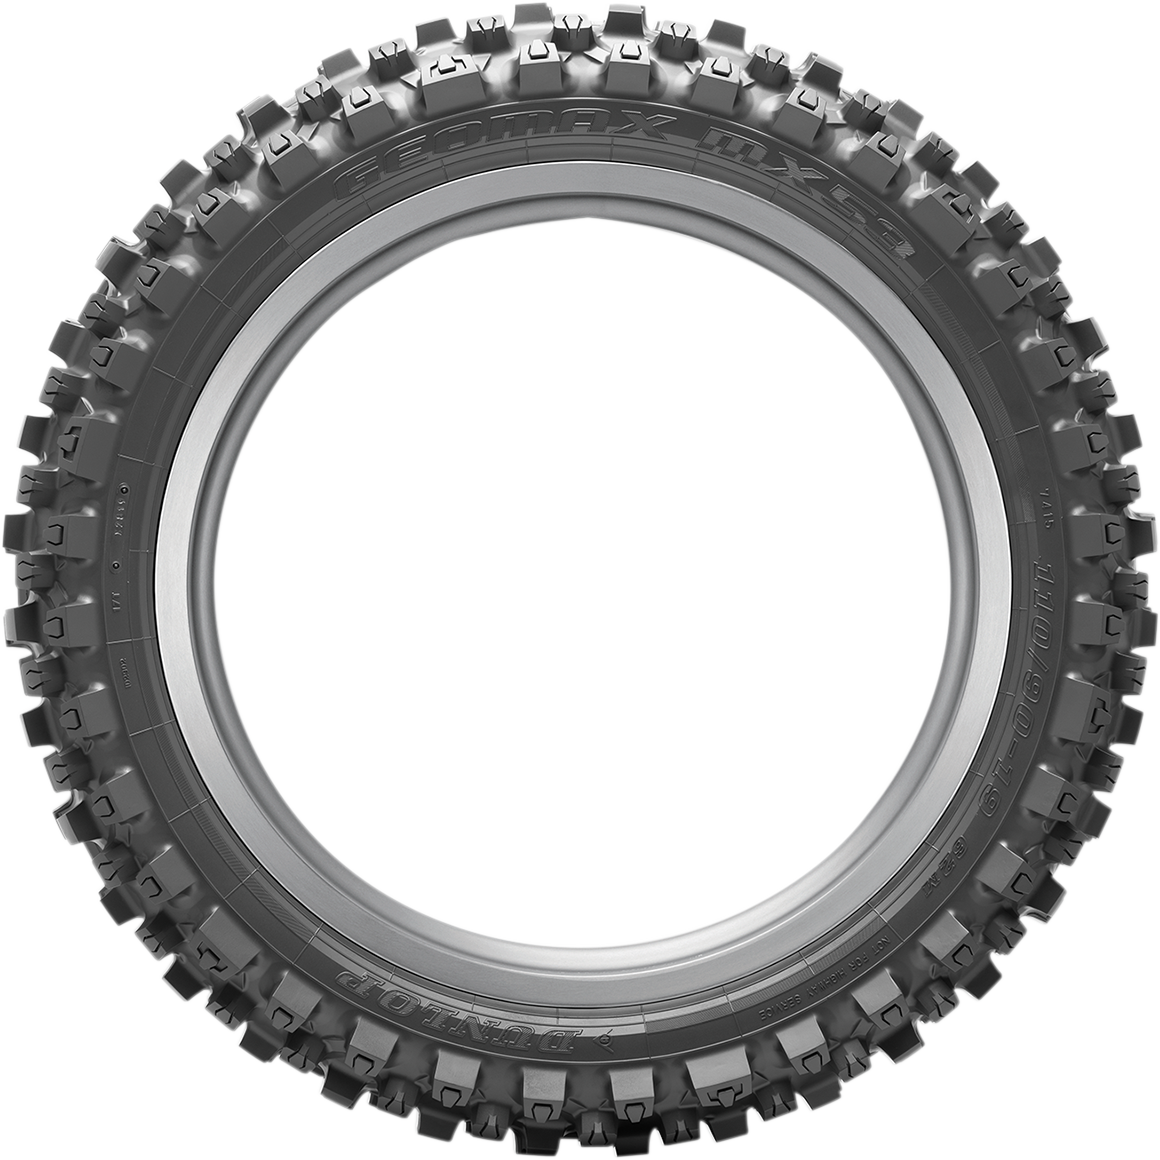 DUNLOP Tire - Geomax MX53* - Rear - 100/100-18 - 59M 45236865